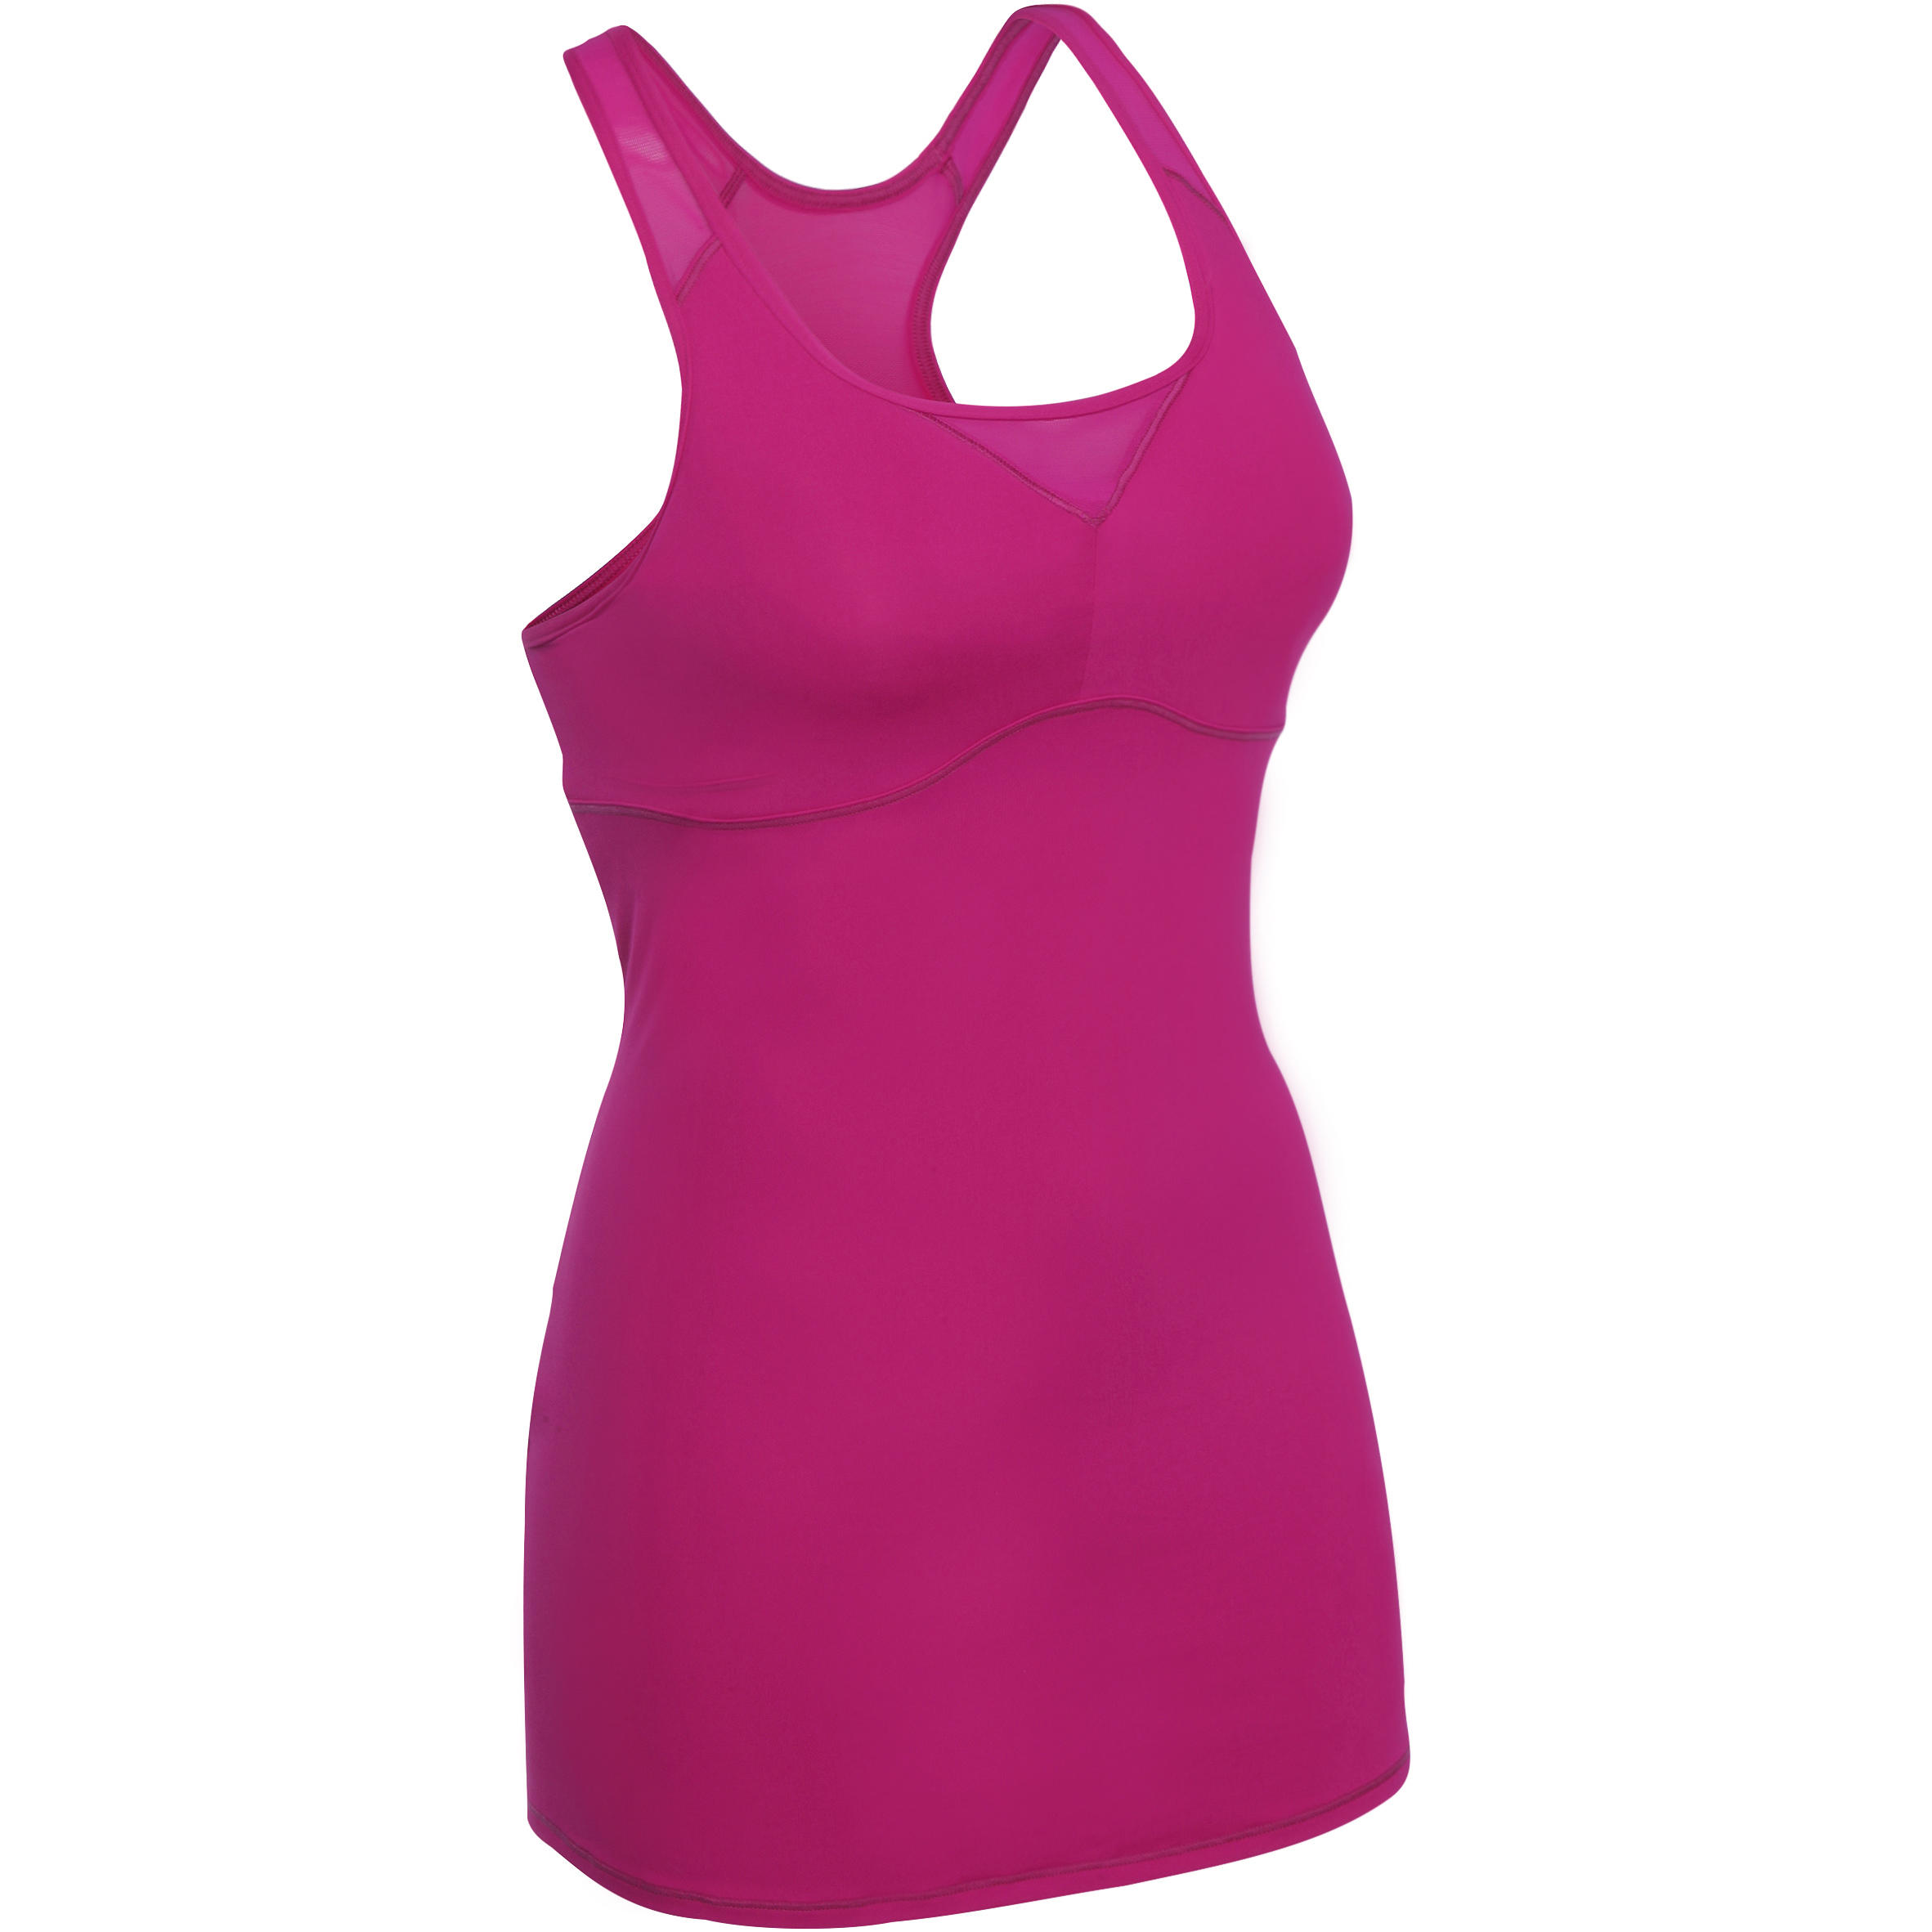 DOMYOS Breathe Women's Fitness Tank Top with Built-in Bra - Dark Pink